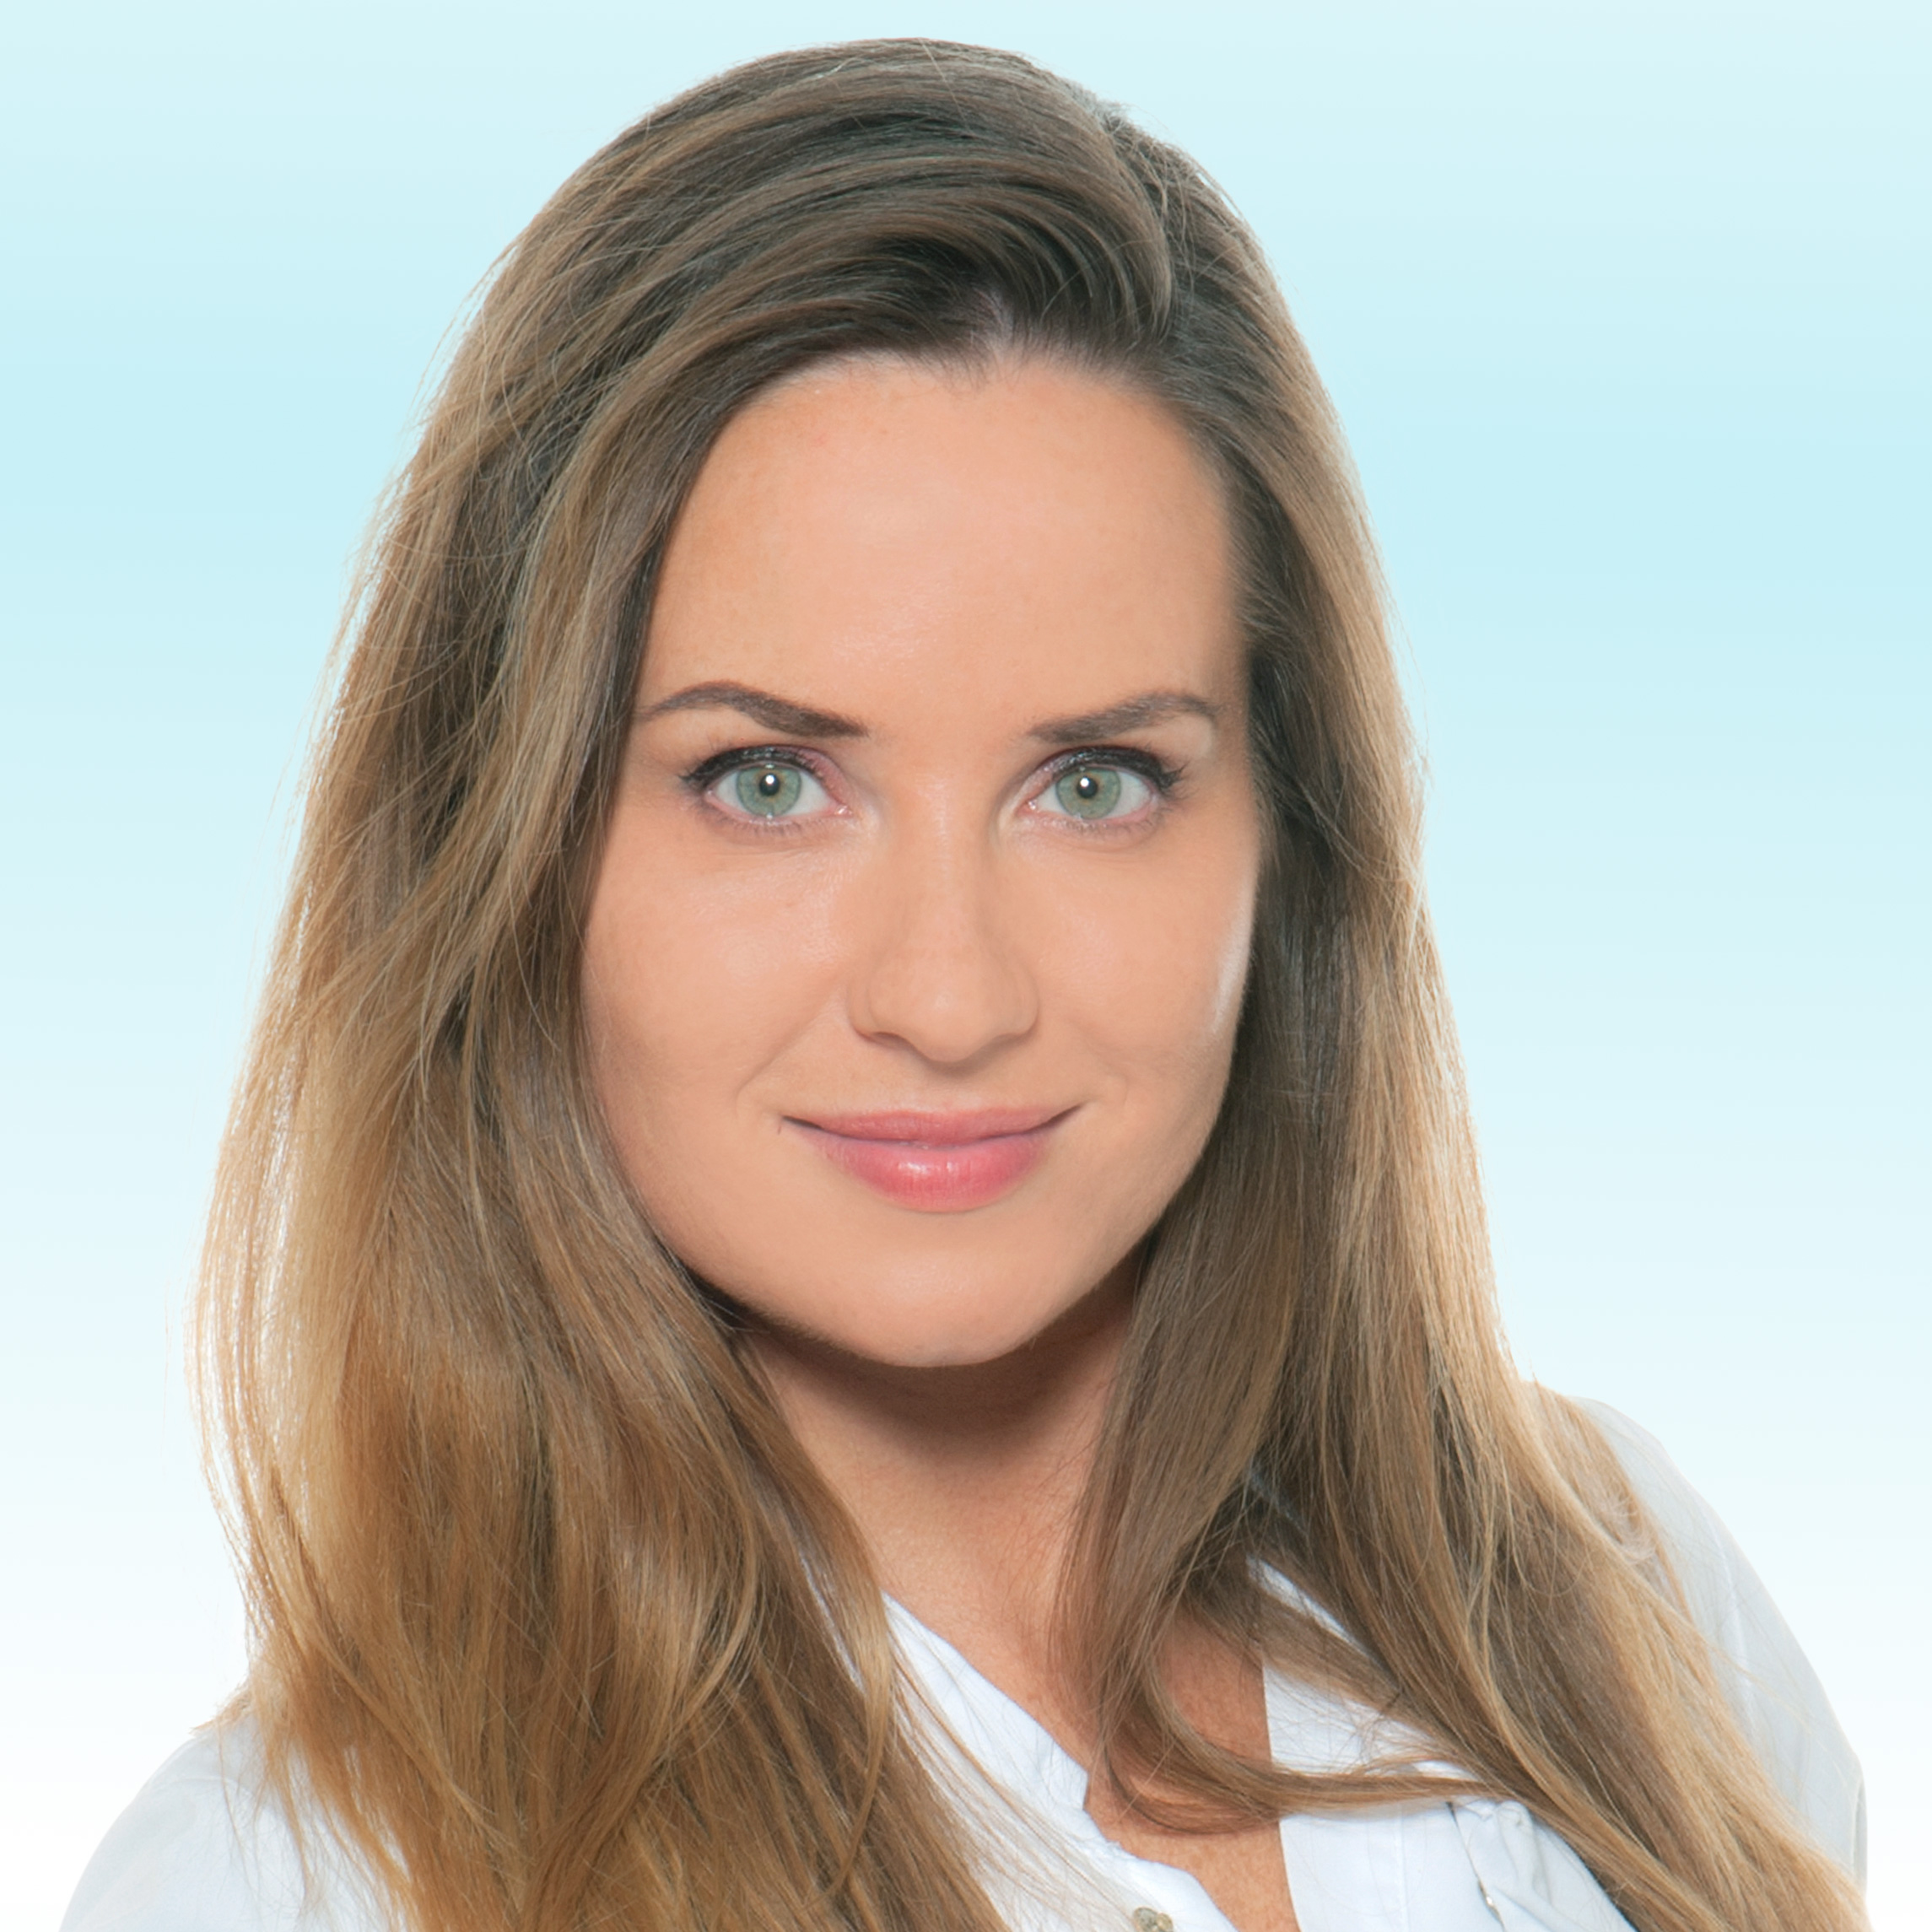 Dermatologo, Dr. Franziska Wenz